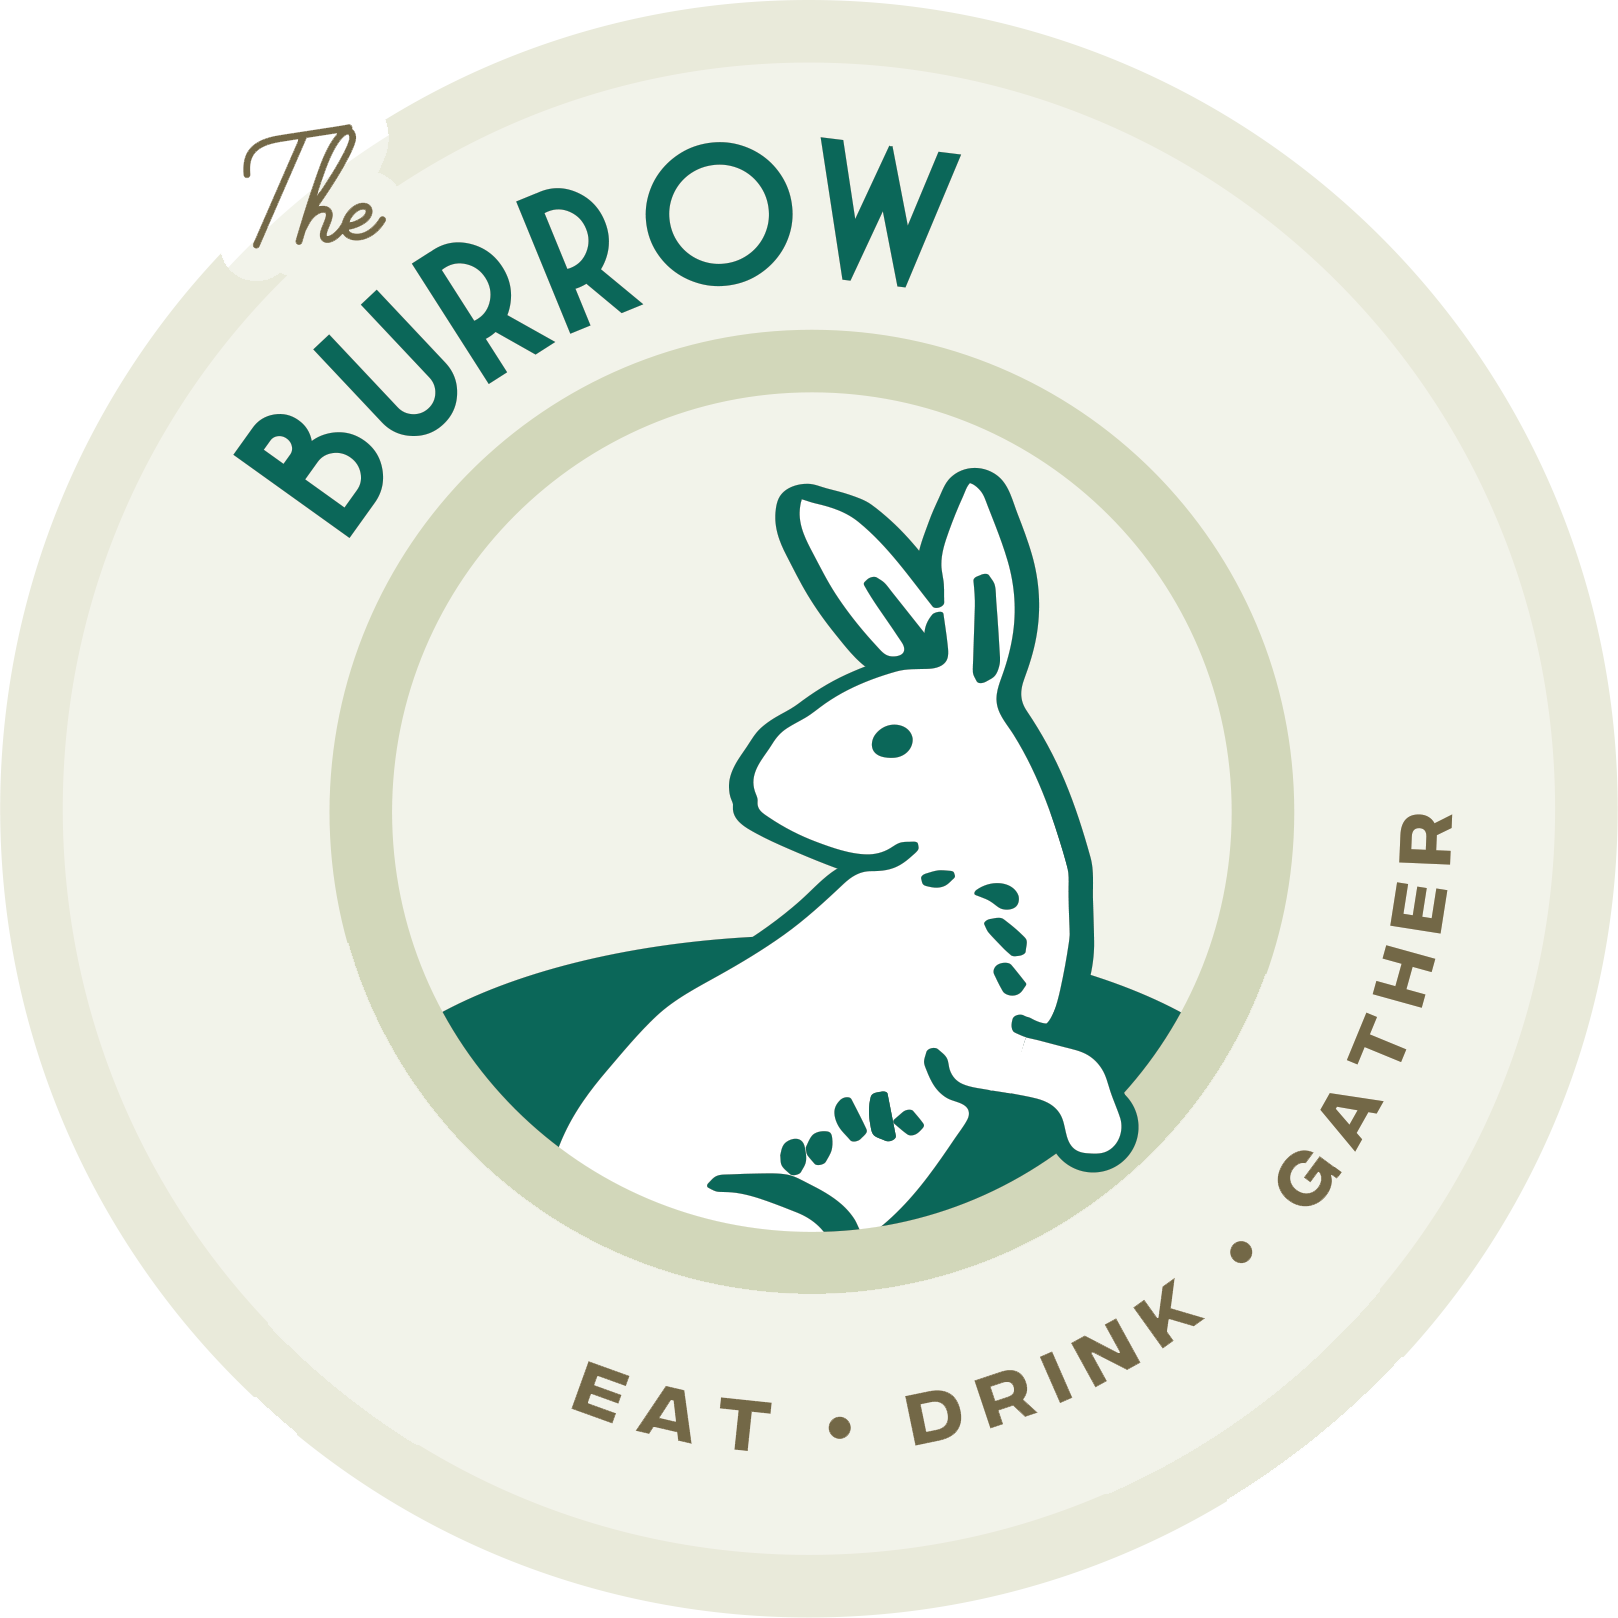 The Burrow logo